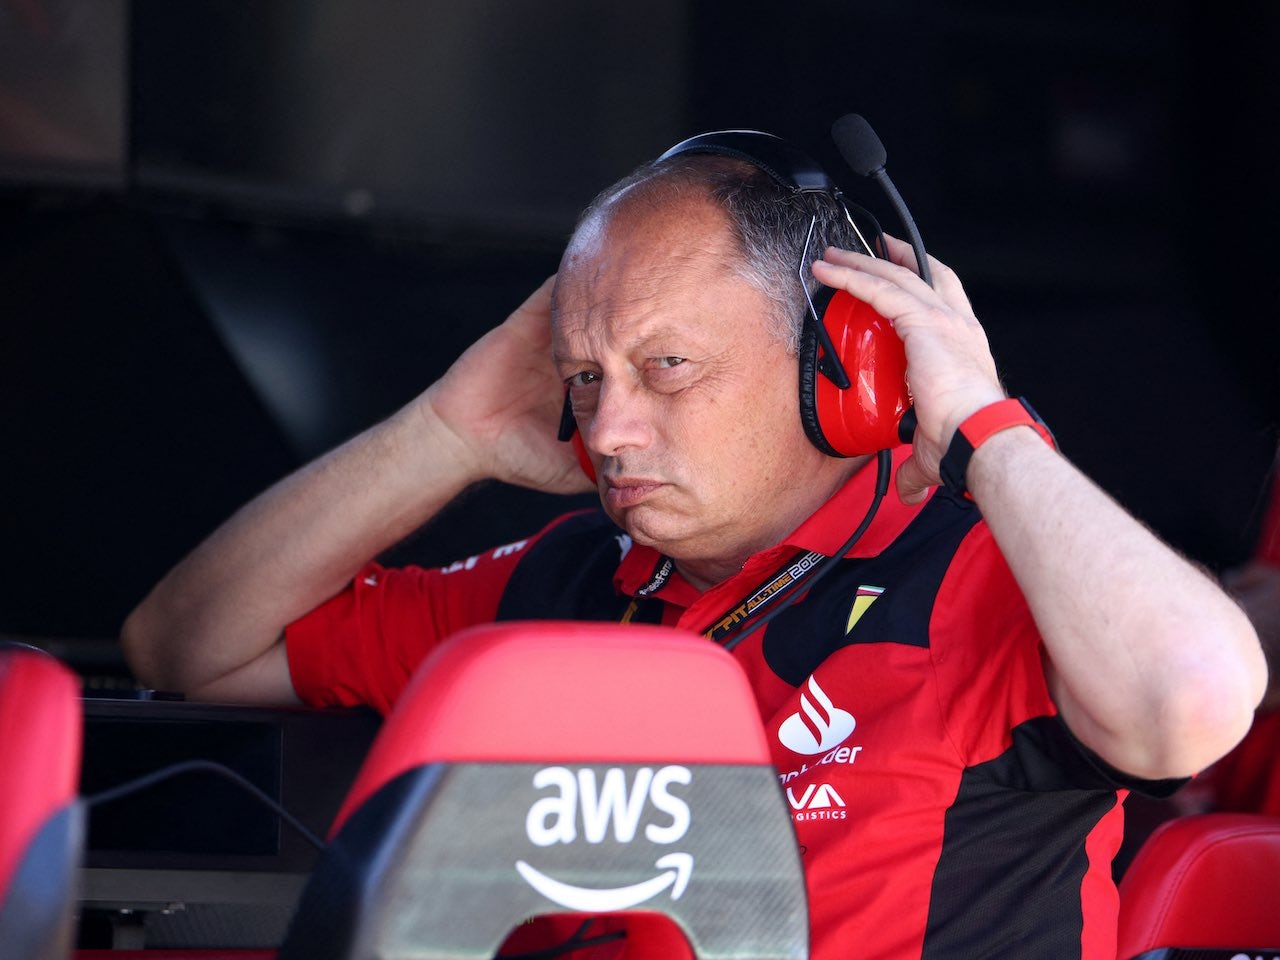 'Top' signing will work on 2025 Ferrari - Vasseur